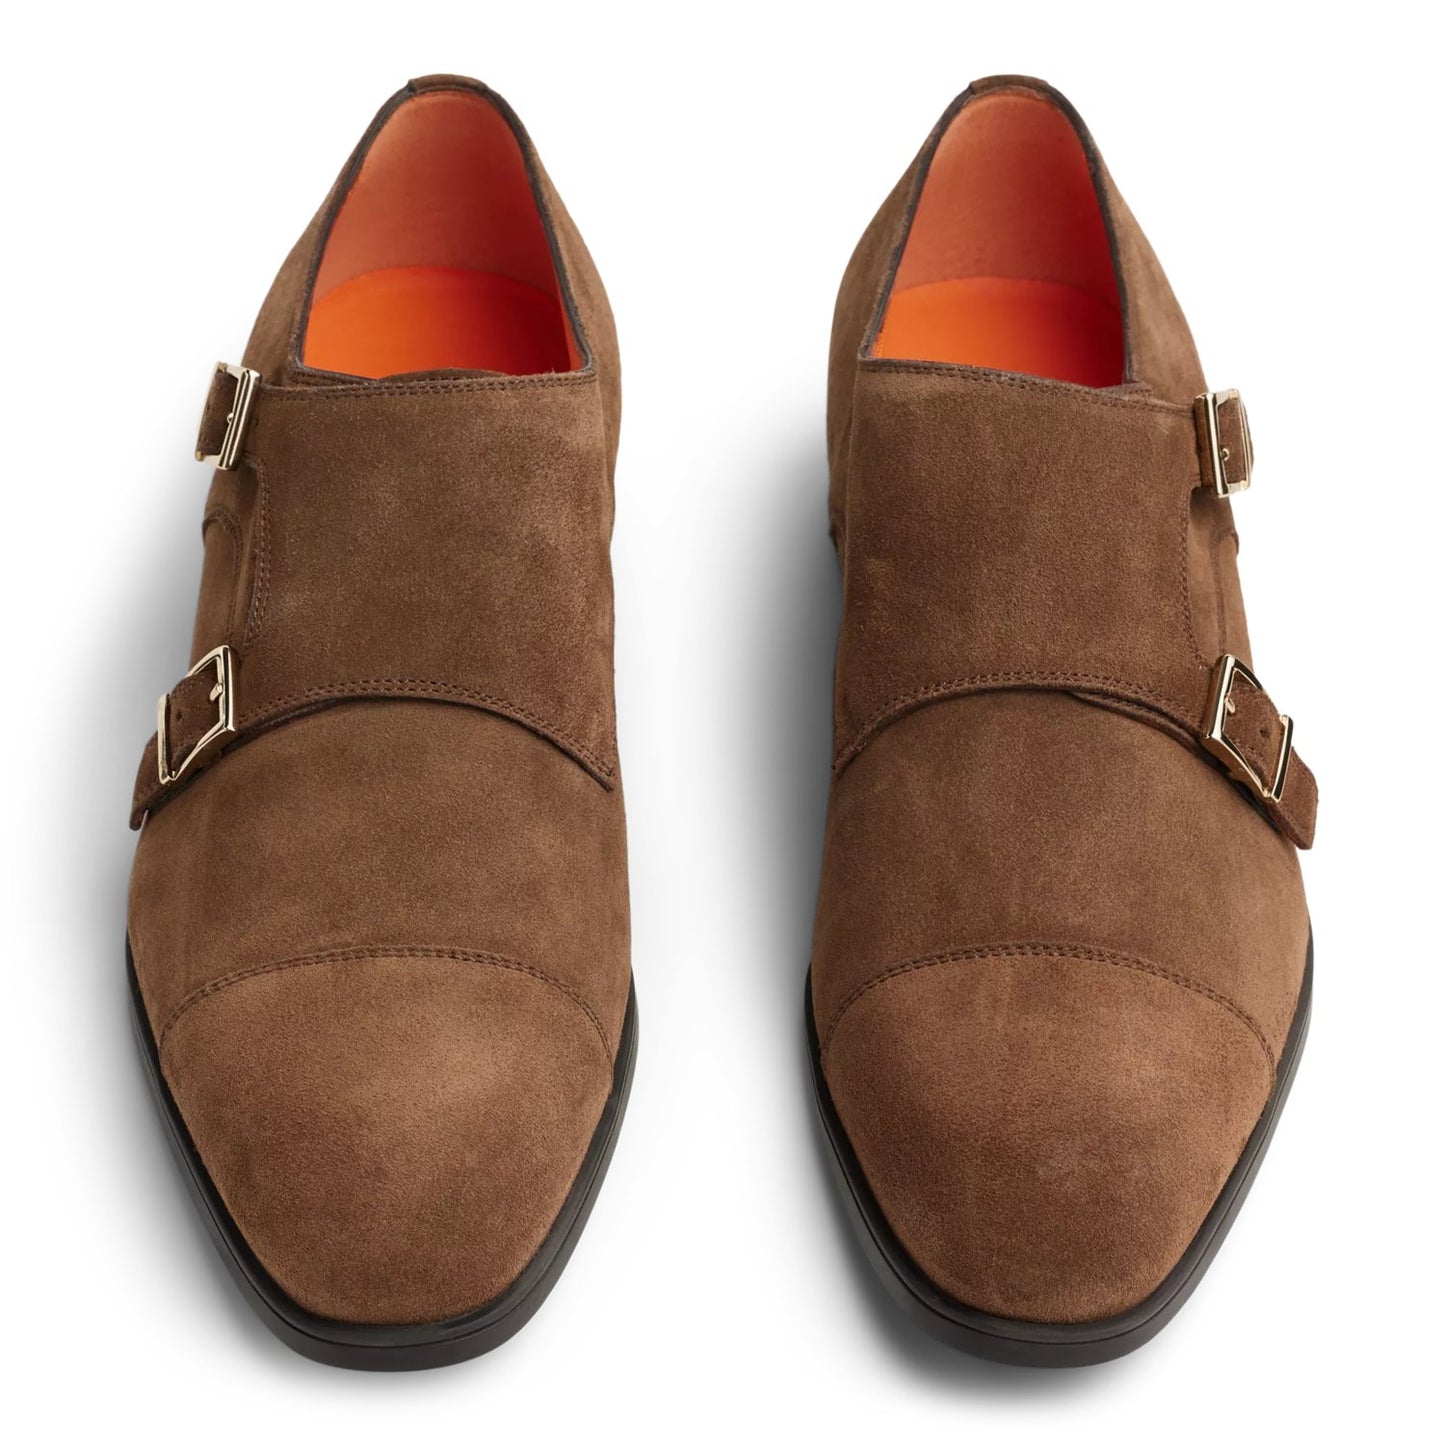 Beginner Suede Monk Strap Shoes